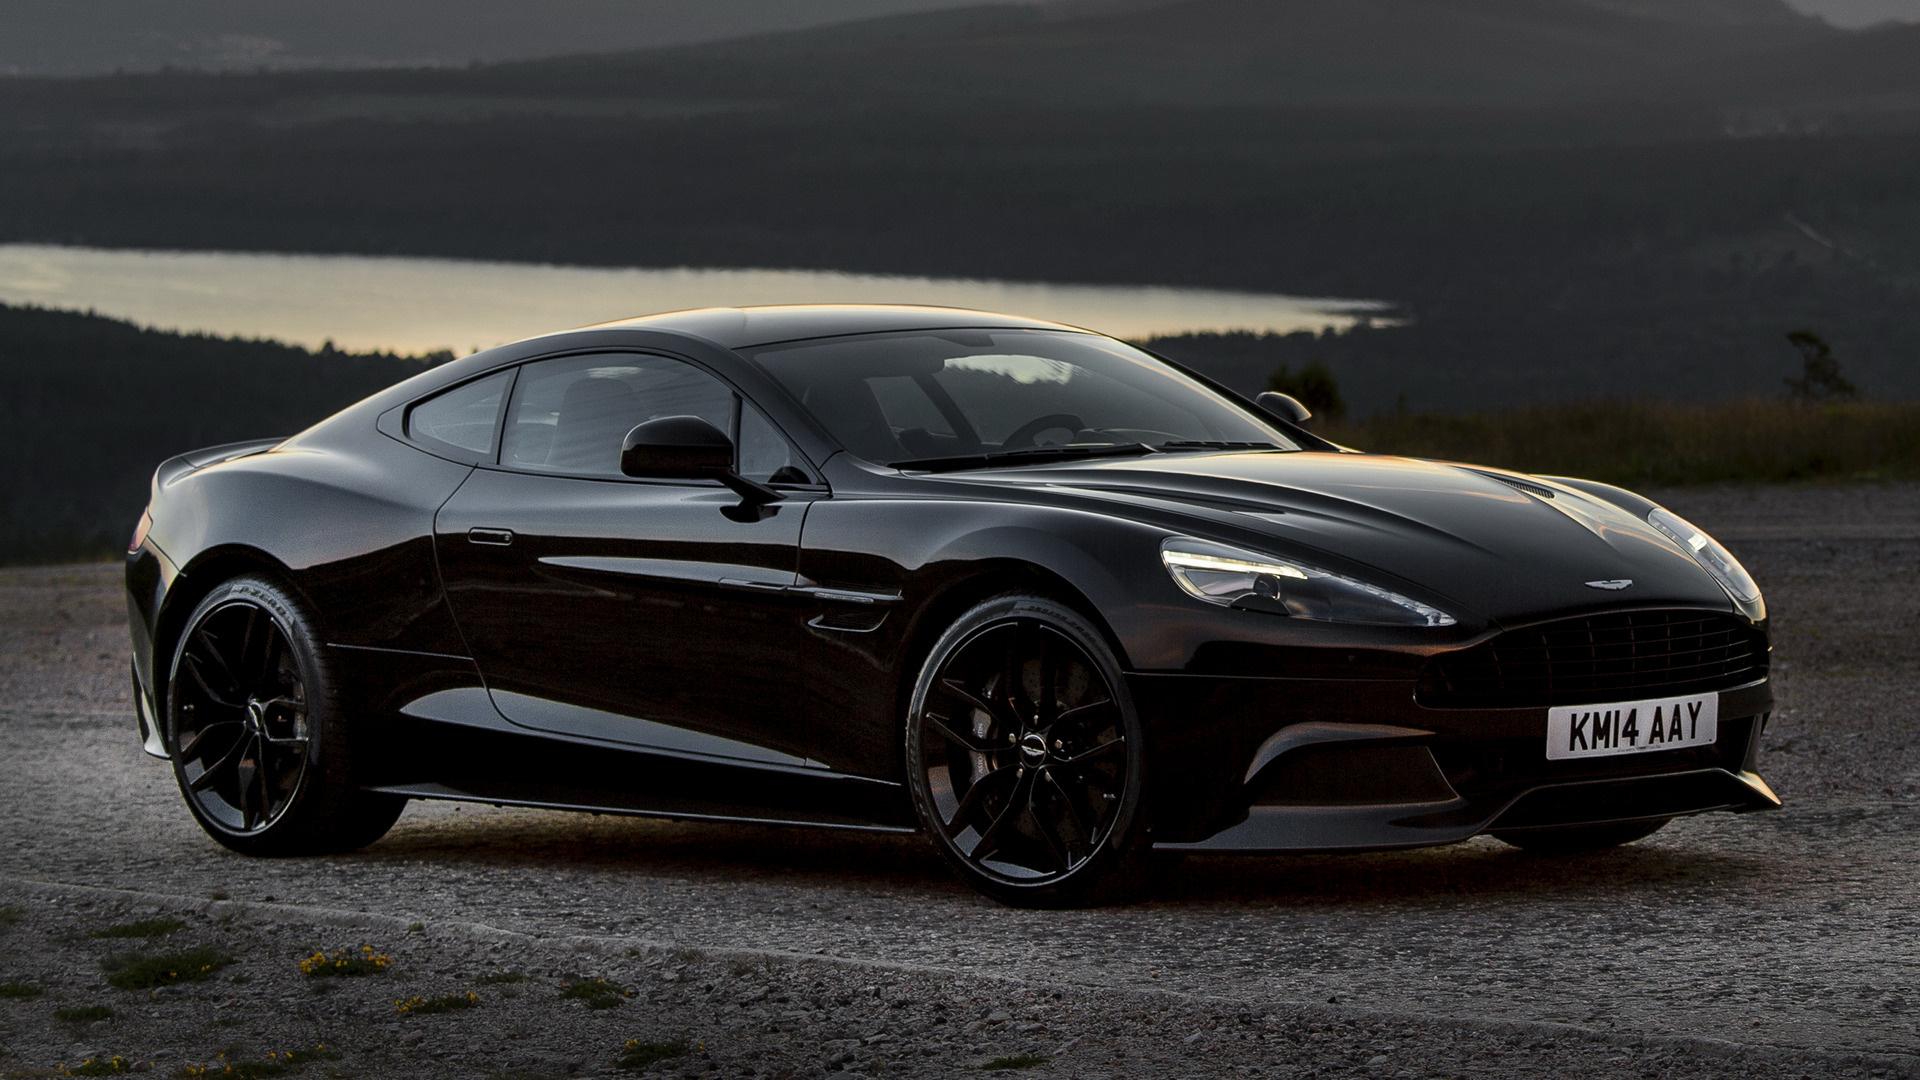 Aston Martin Vanquish Carbon Black and HD Image